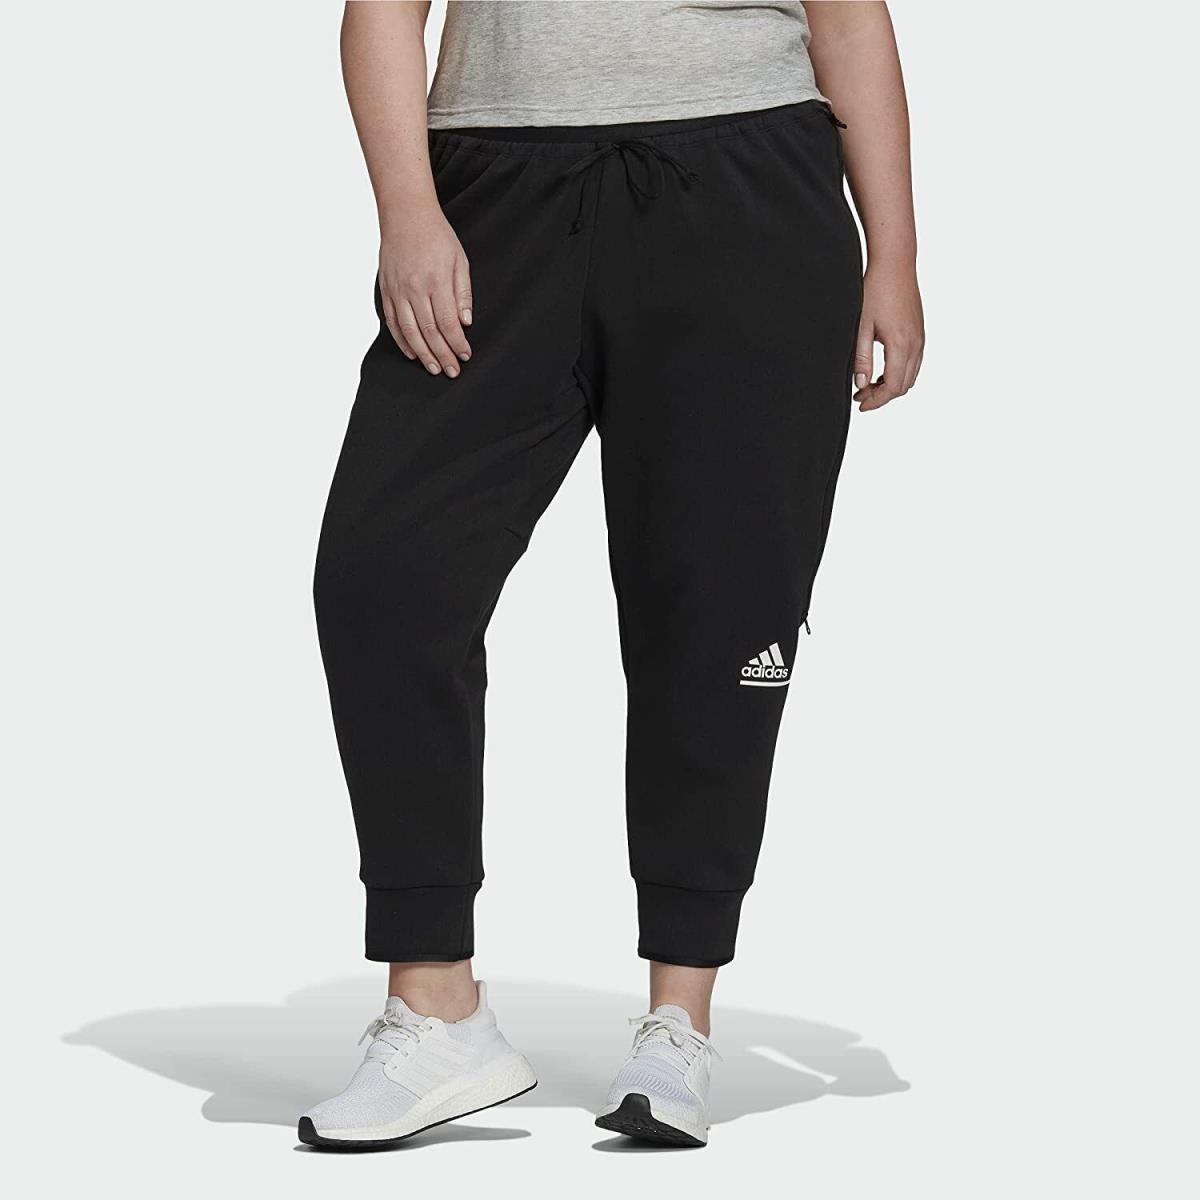 Adidas Z.n.e. Tracksuit Bottoms Plus Size Women Zip Jogger GM3295 Sweat 3X